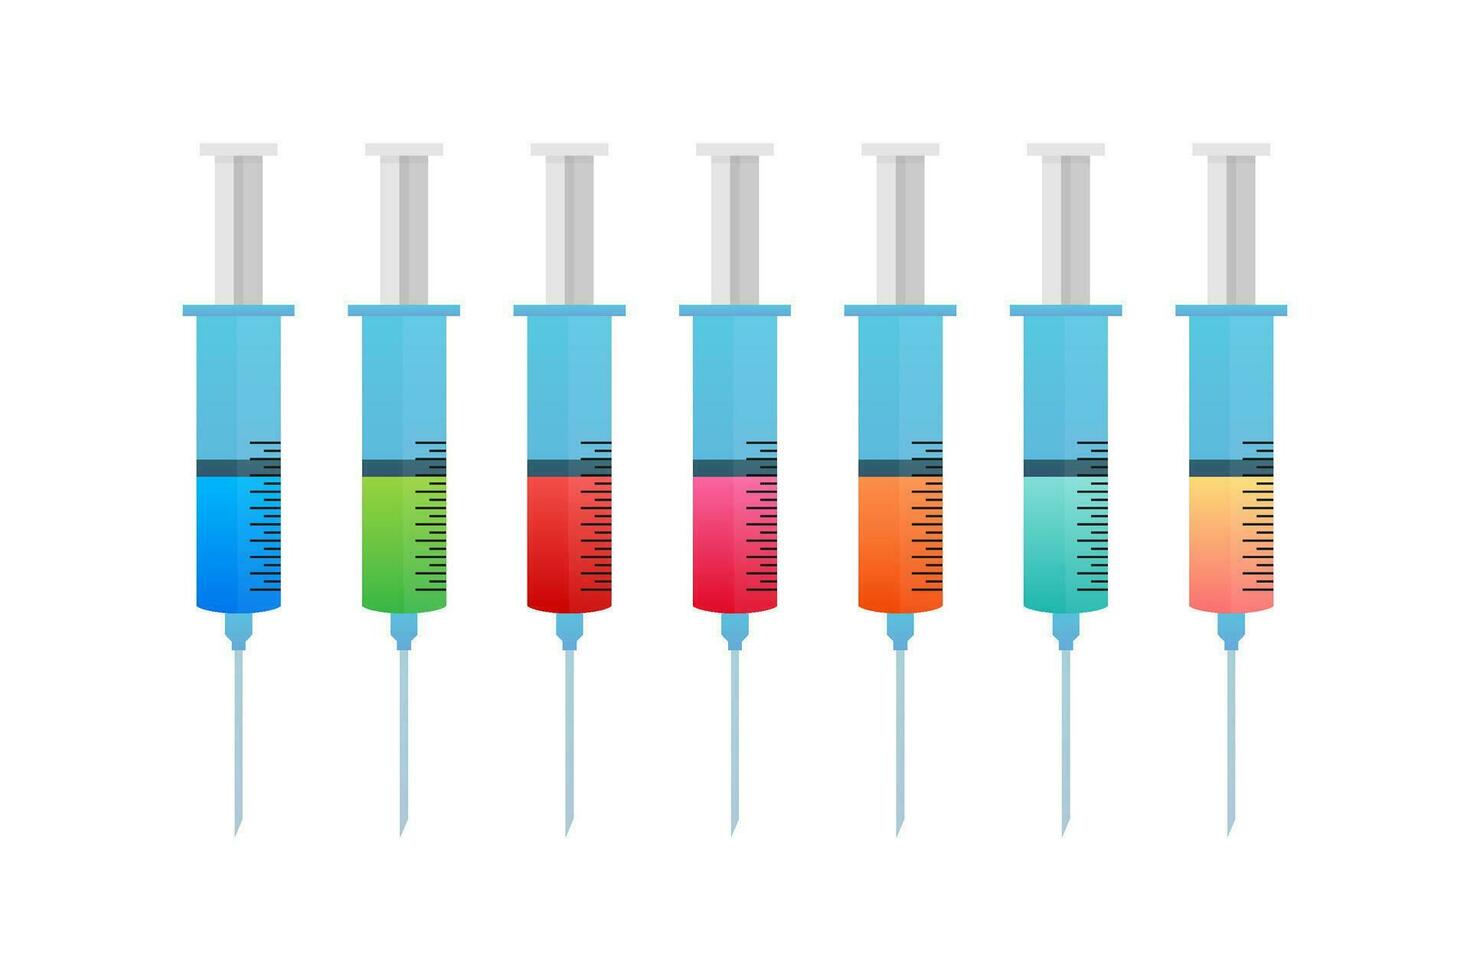 Medical syringe pattern. The injection syringe. Vector stock illustration